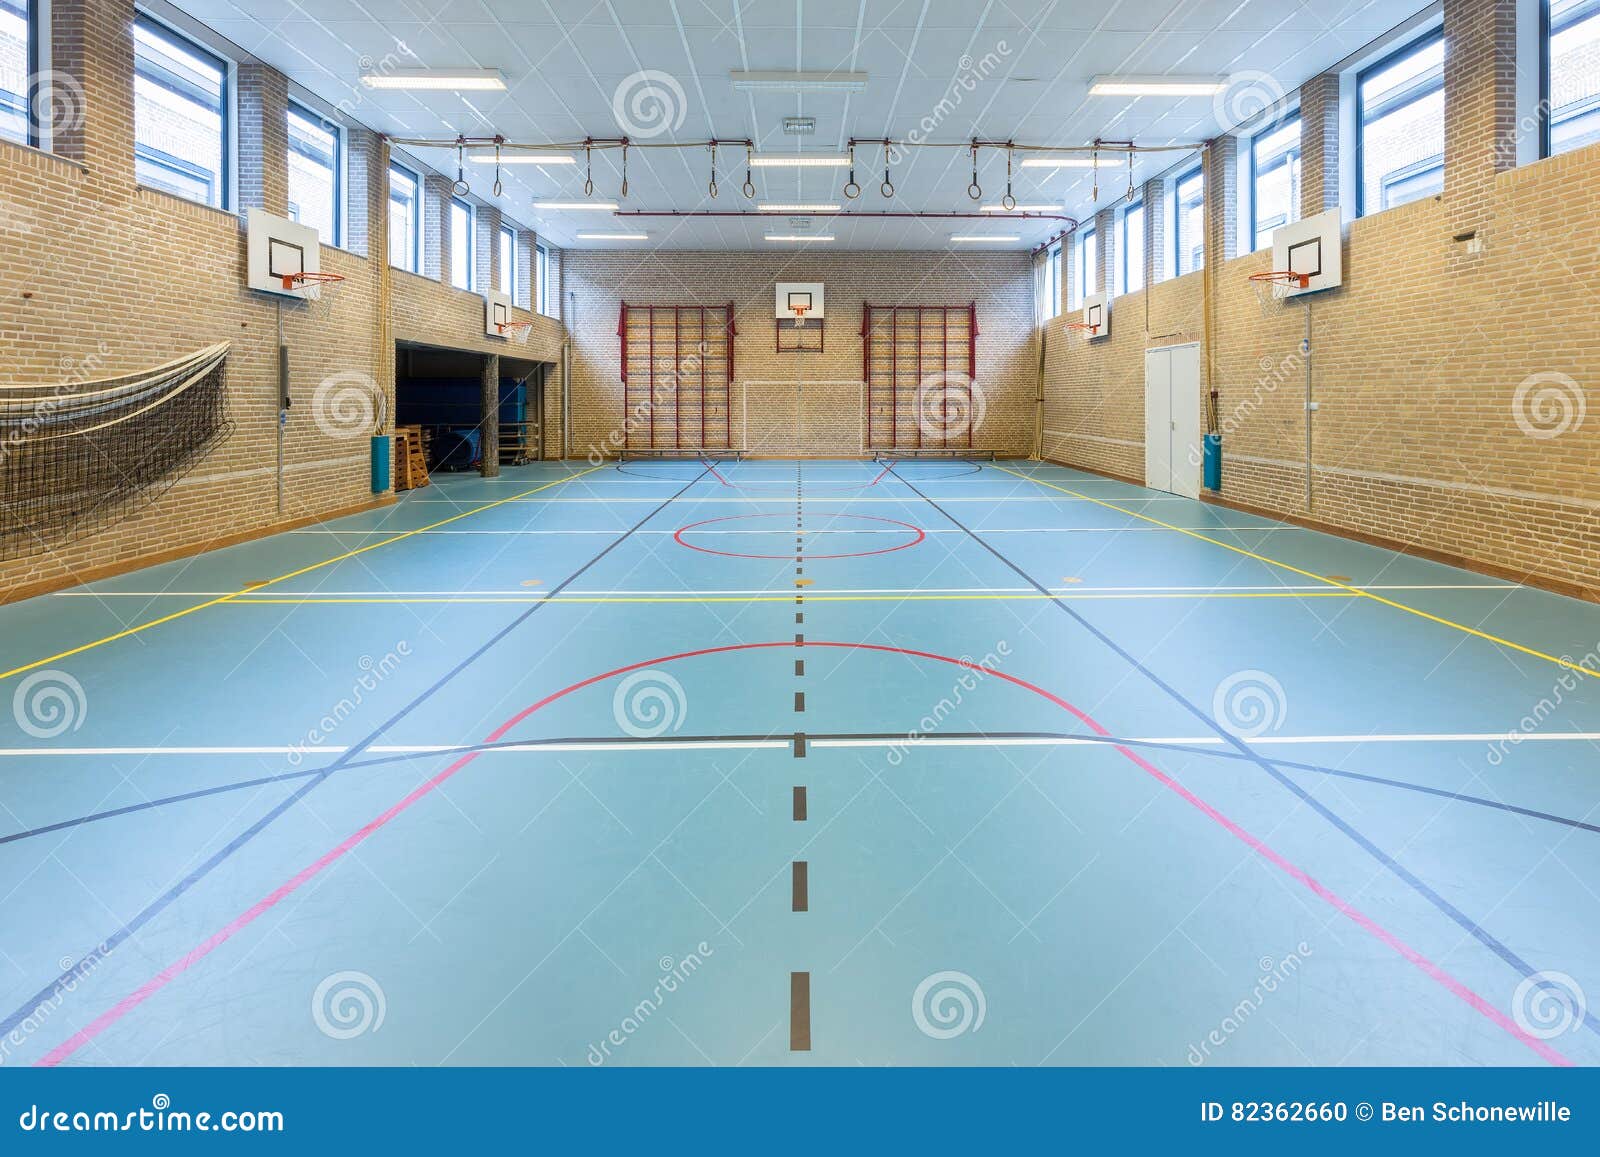 interior dutch gymnasium for school sports